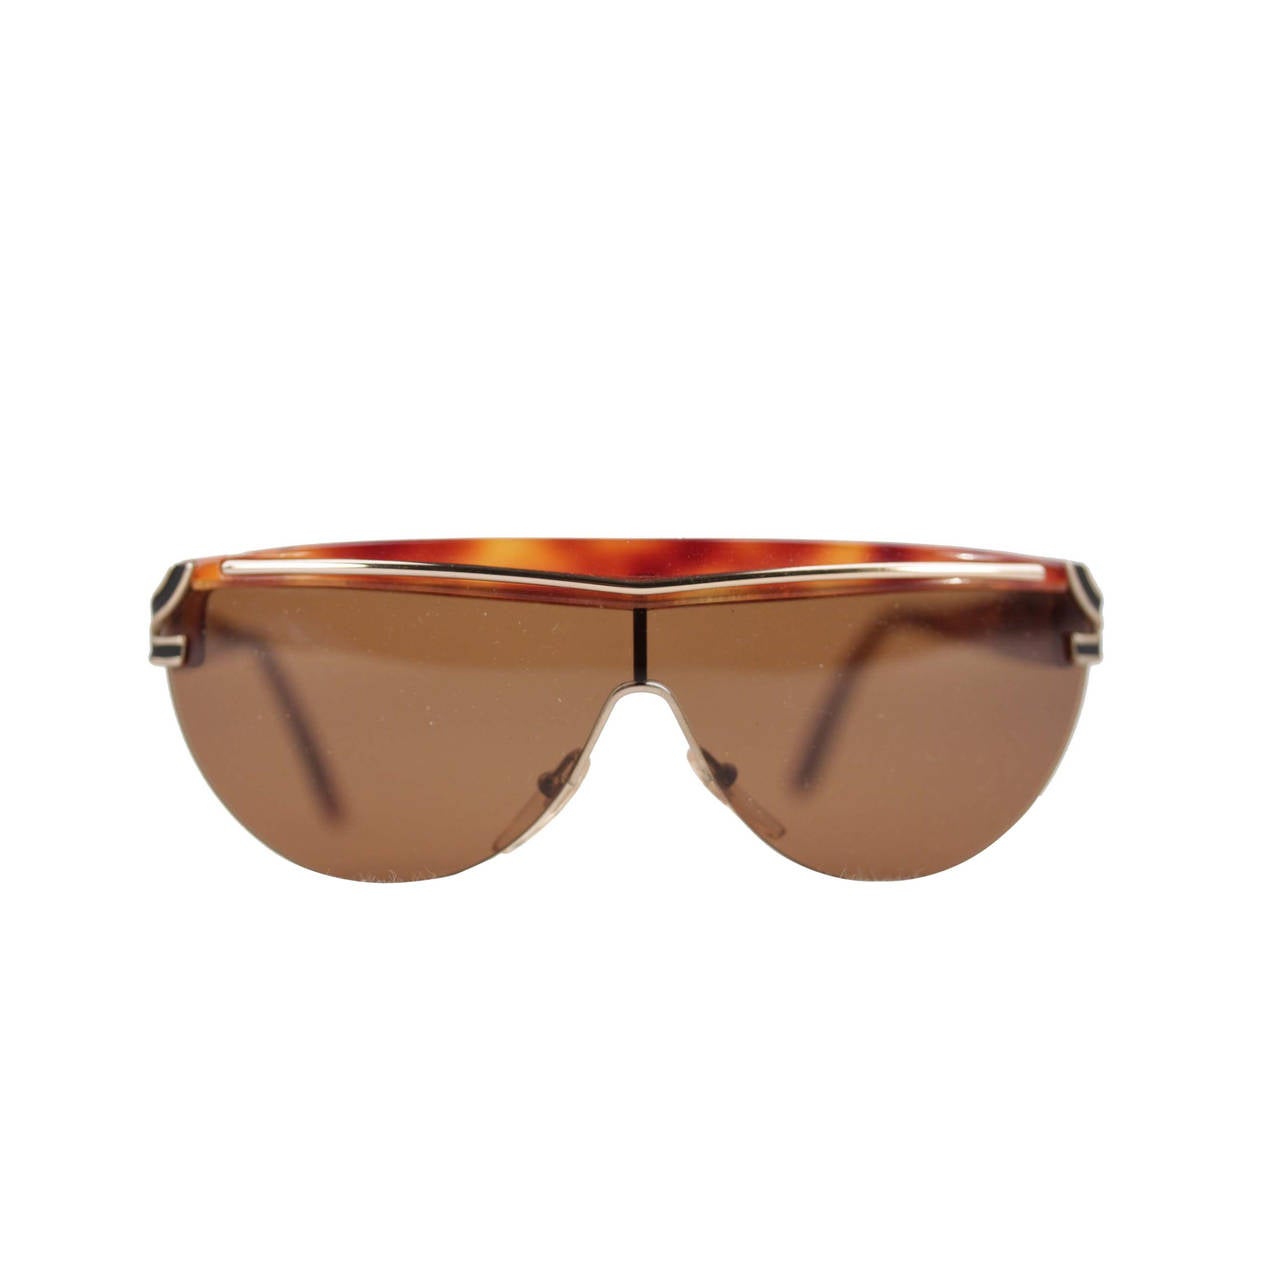 LINO VENEZIANI Vintage SUNGLASSES brown LV 832-14 60/18 135 SHIELD eyewear